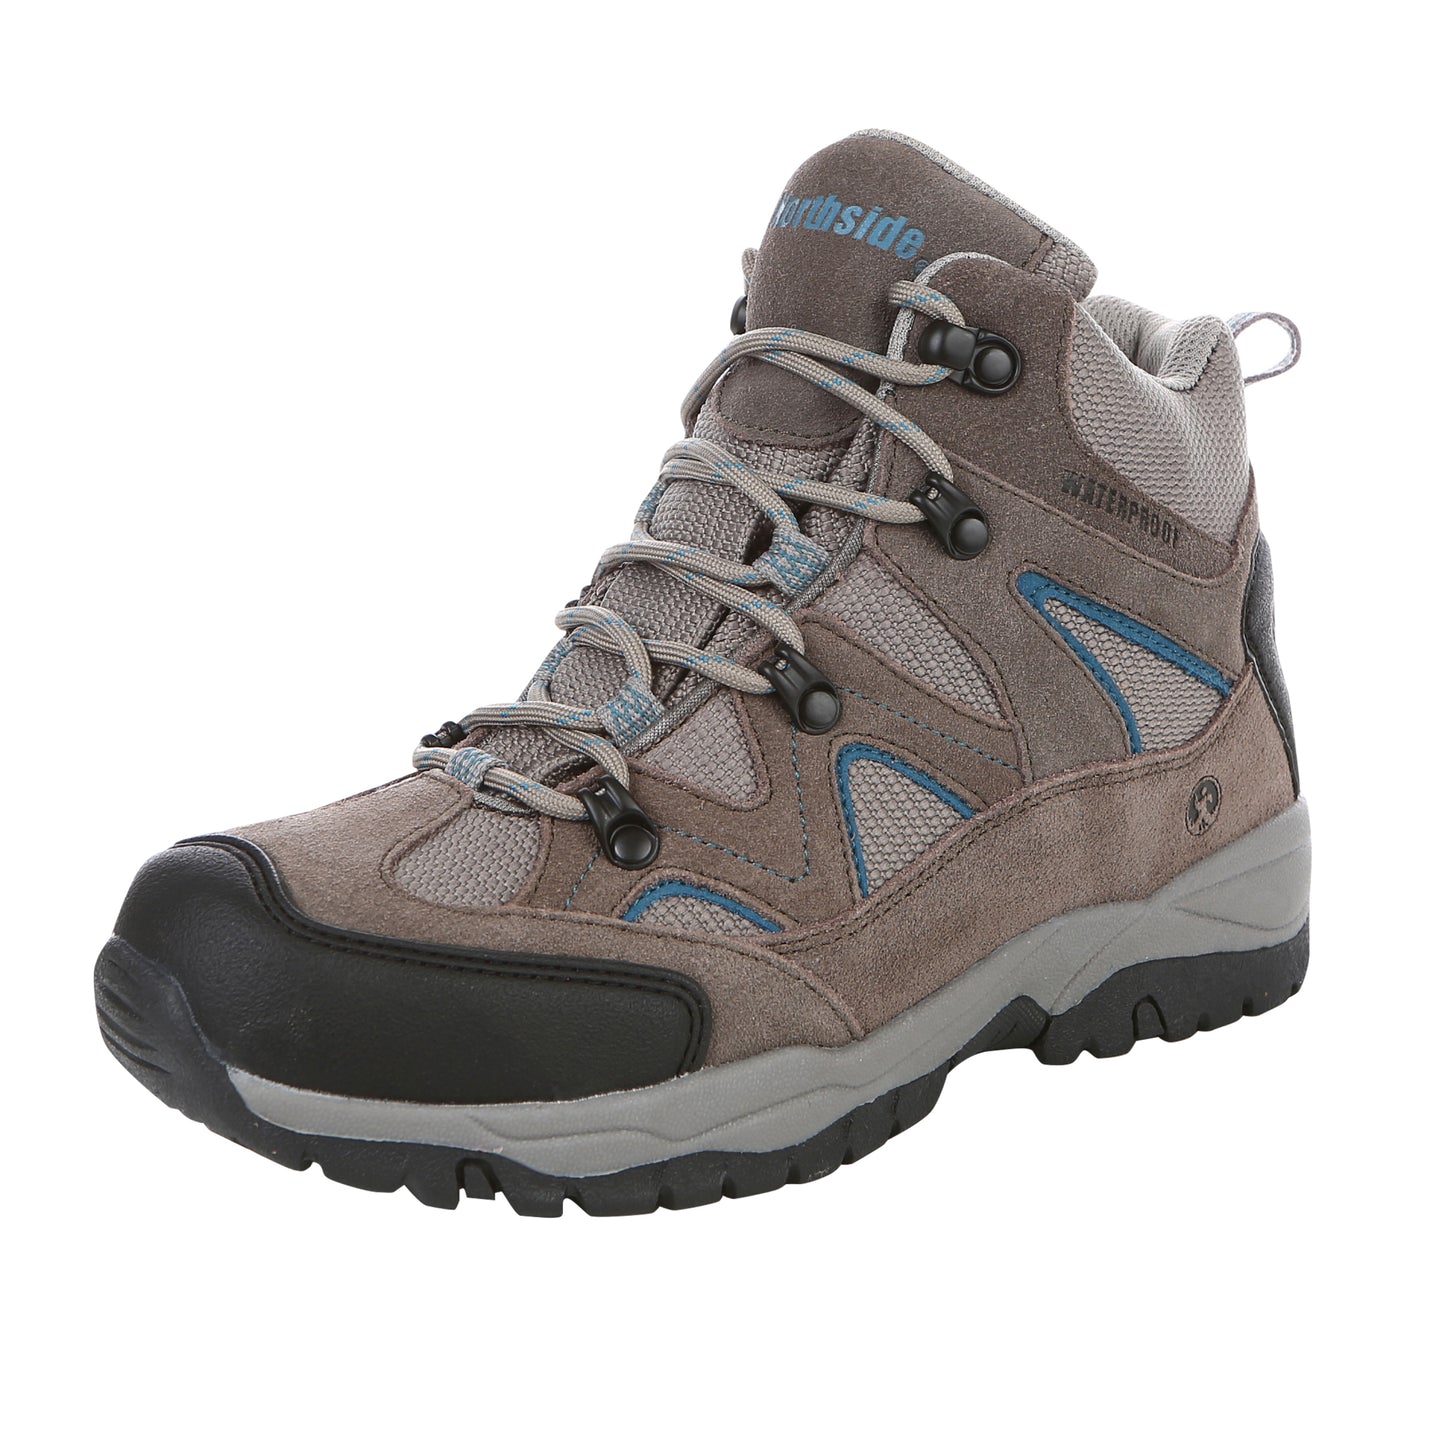 Women's Snohomish Waterproof Hiking Boots